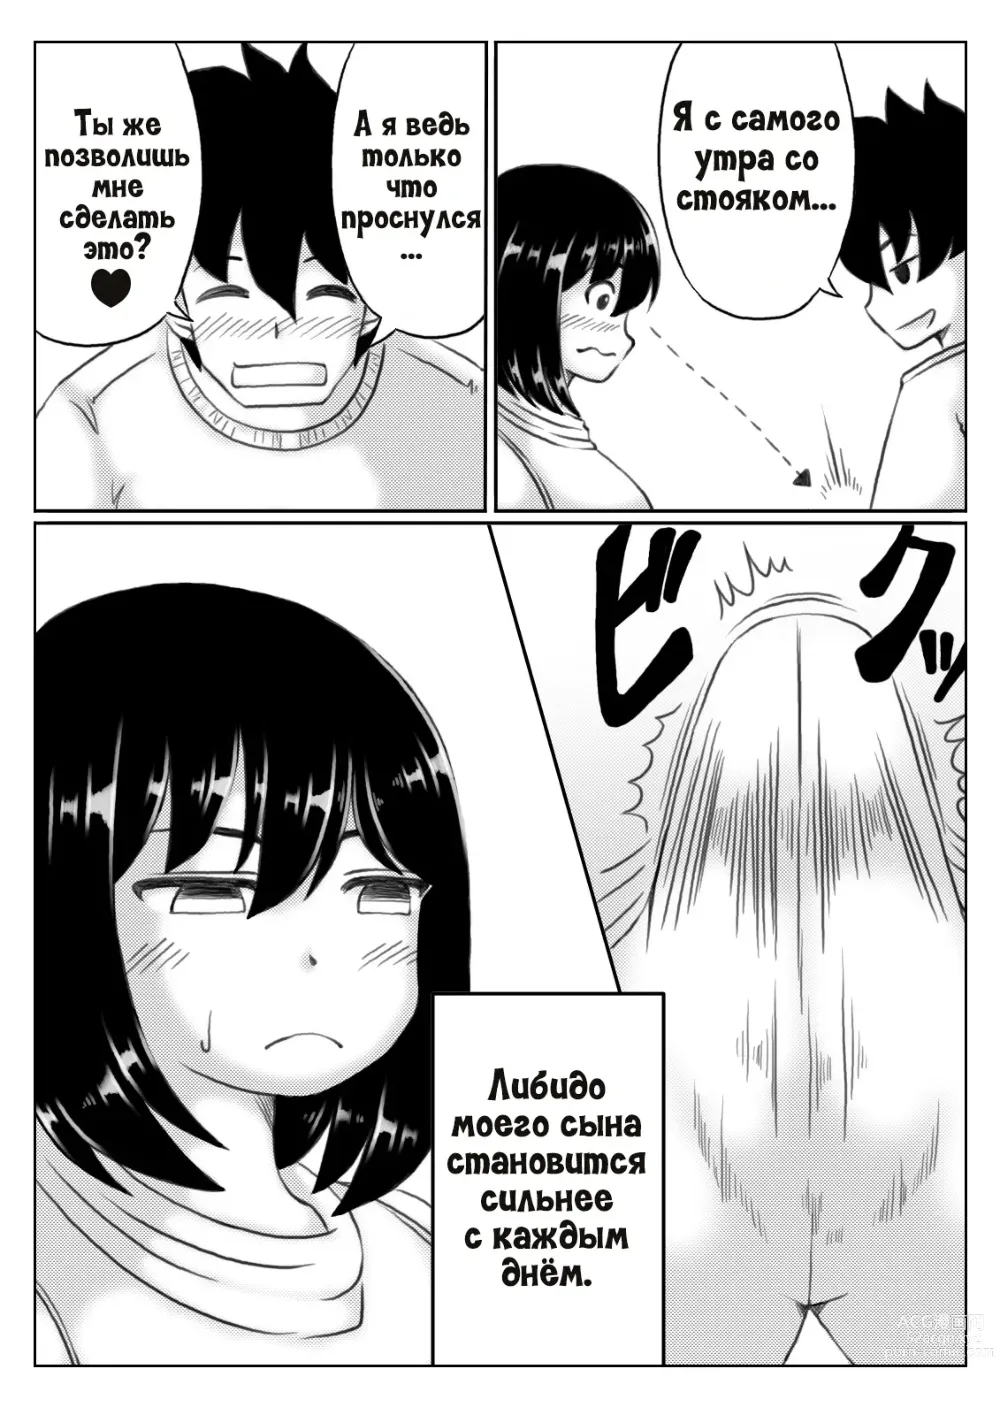 Page 4 of doujinshi Инцест, что начался из-за маминых трусиков 2